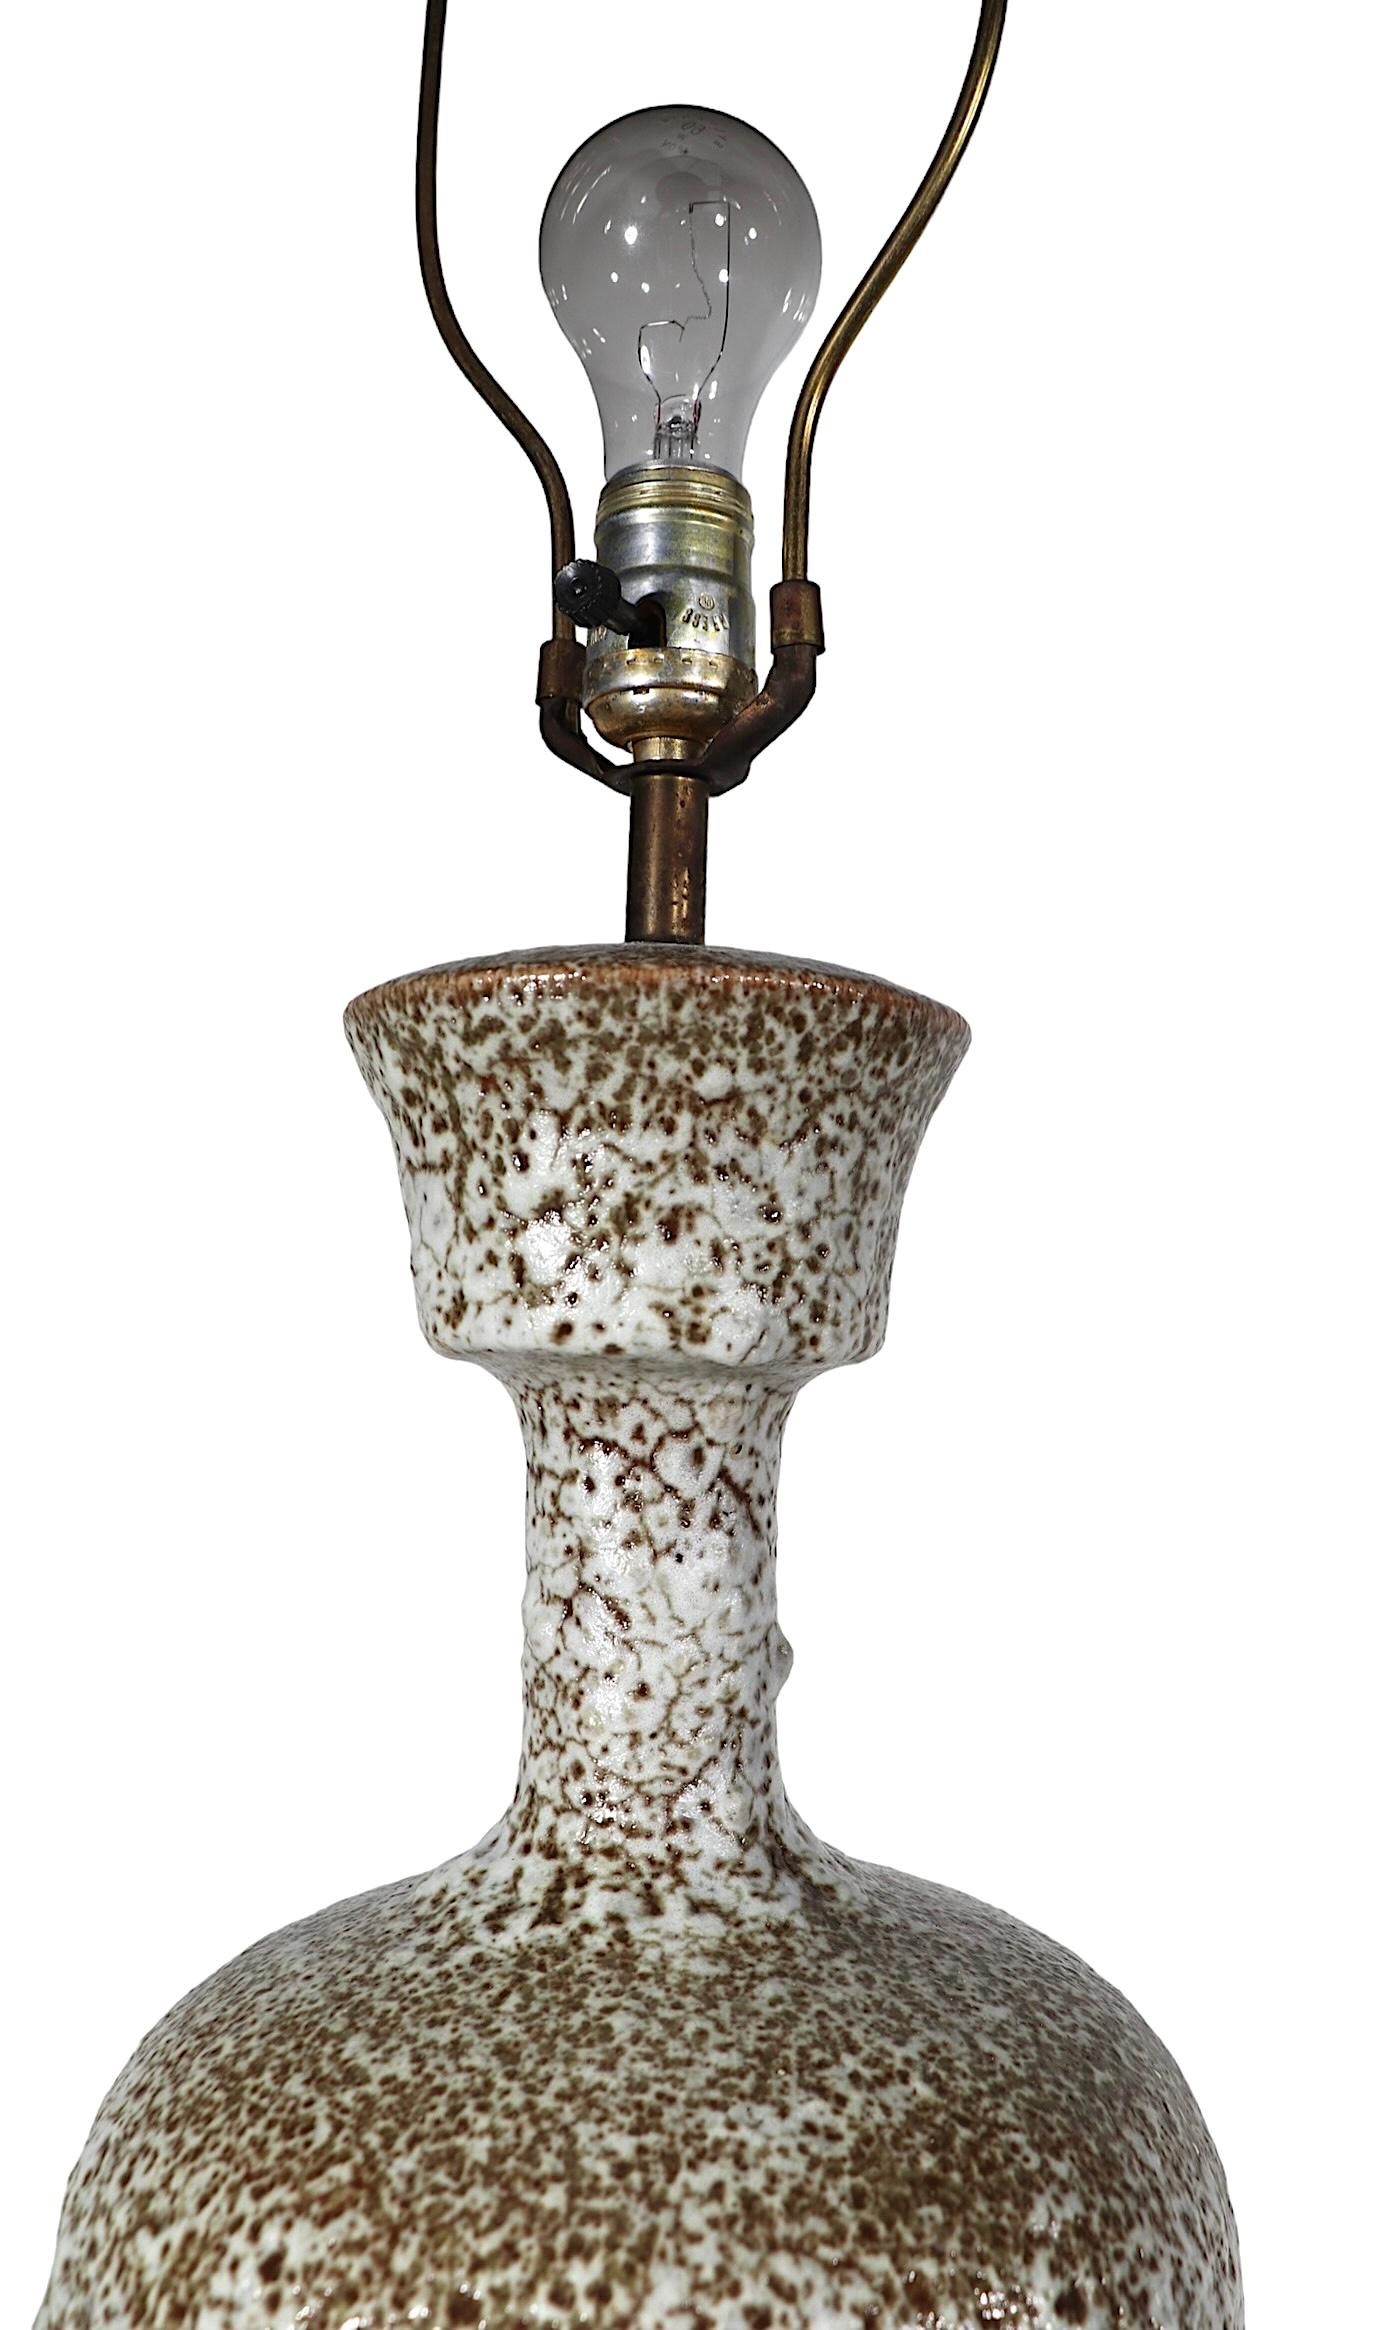 Oversize Hollywood Regency Mid Century Volcanic Glaze Table Lamp c 1950/1960's For Sale 9